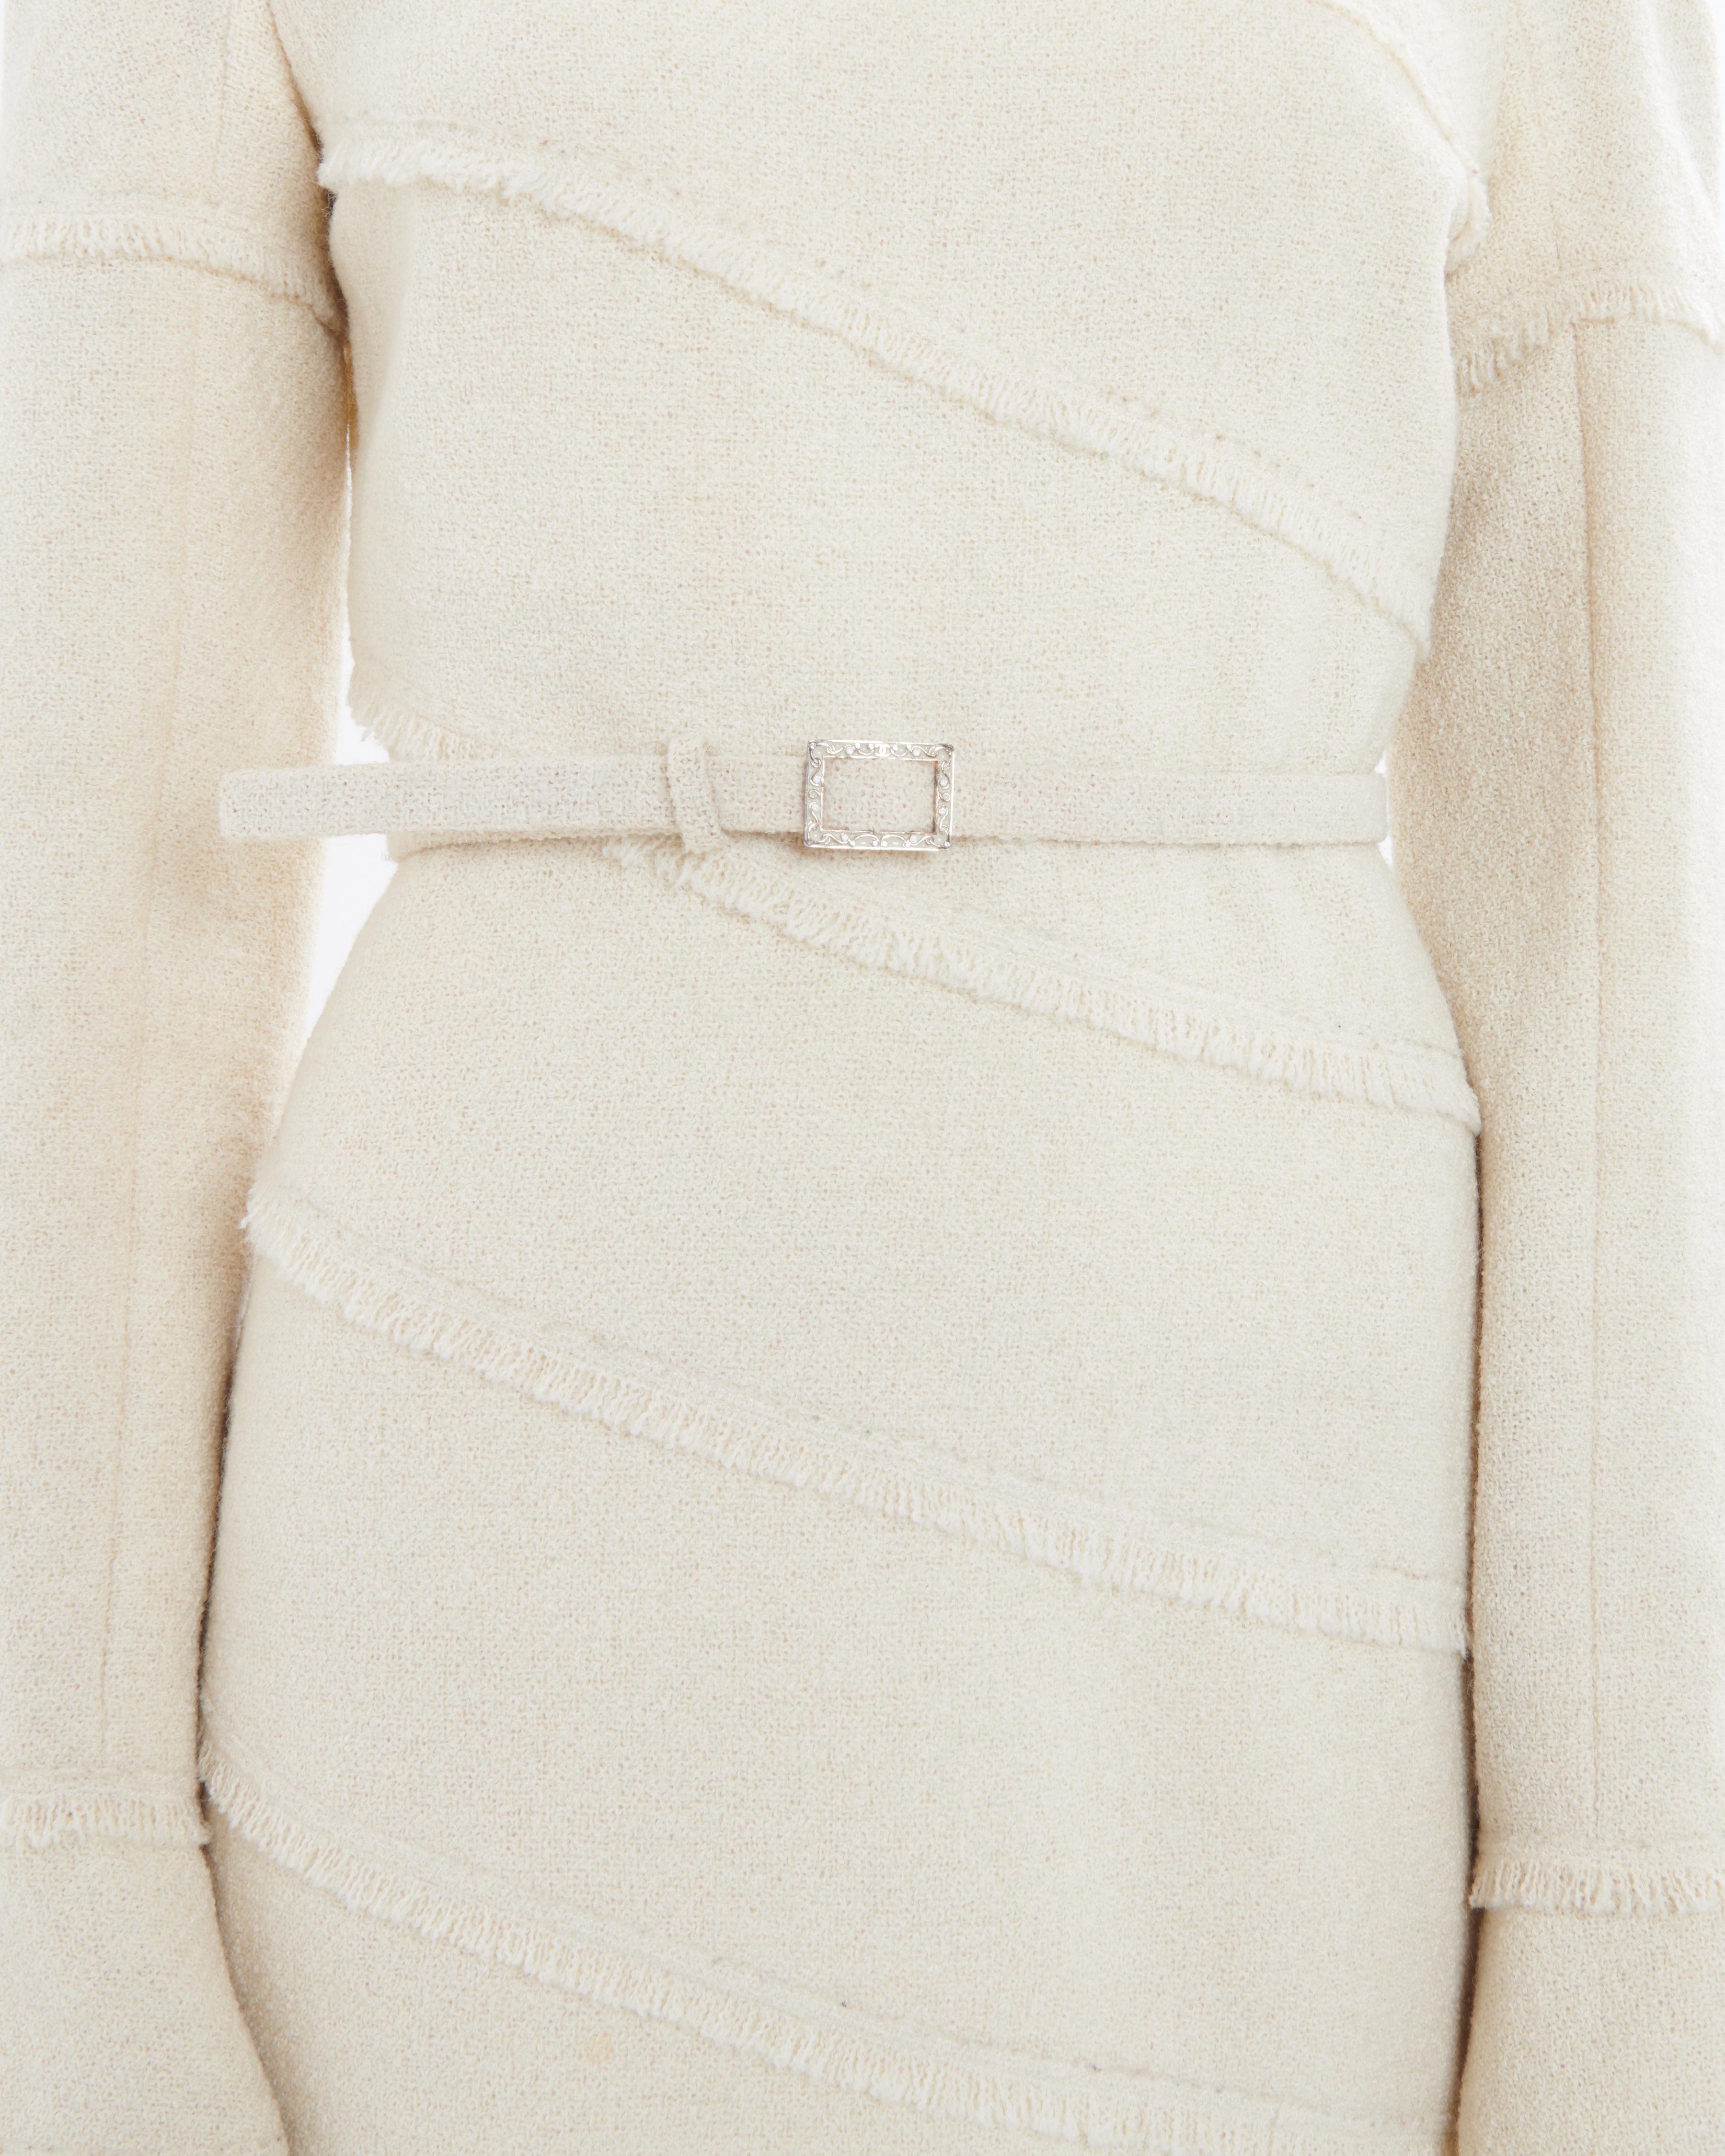 Chanel by Karl Lagerfeld F/W 2008 White tweed turtleneck dress For Sale 5